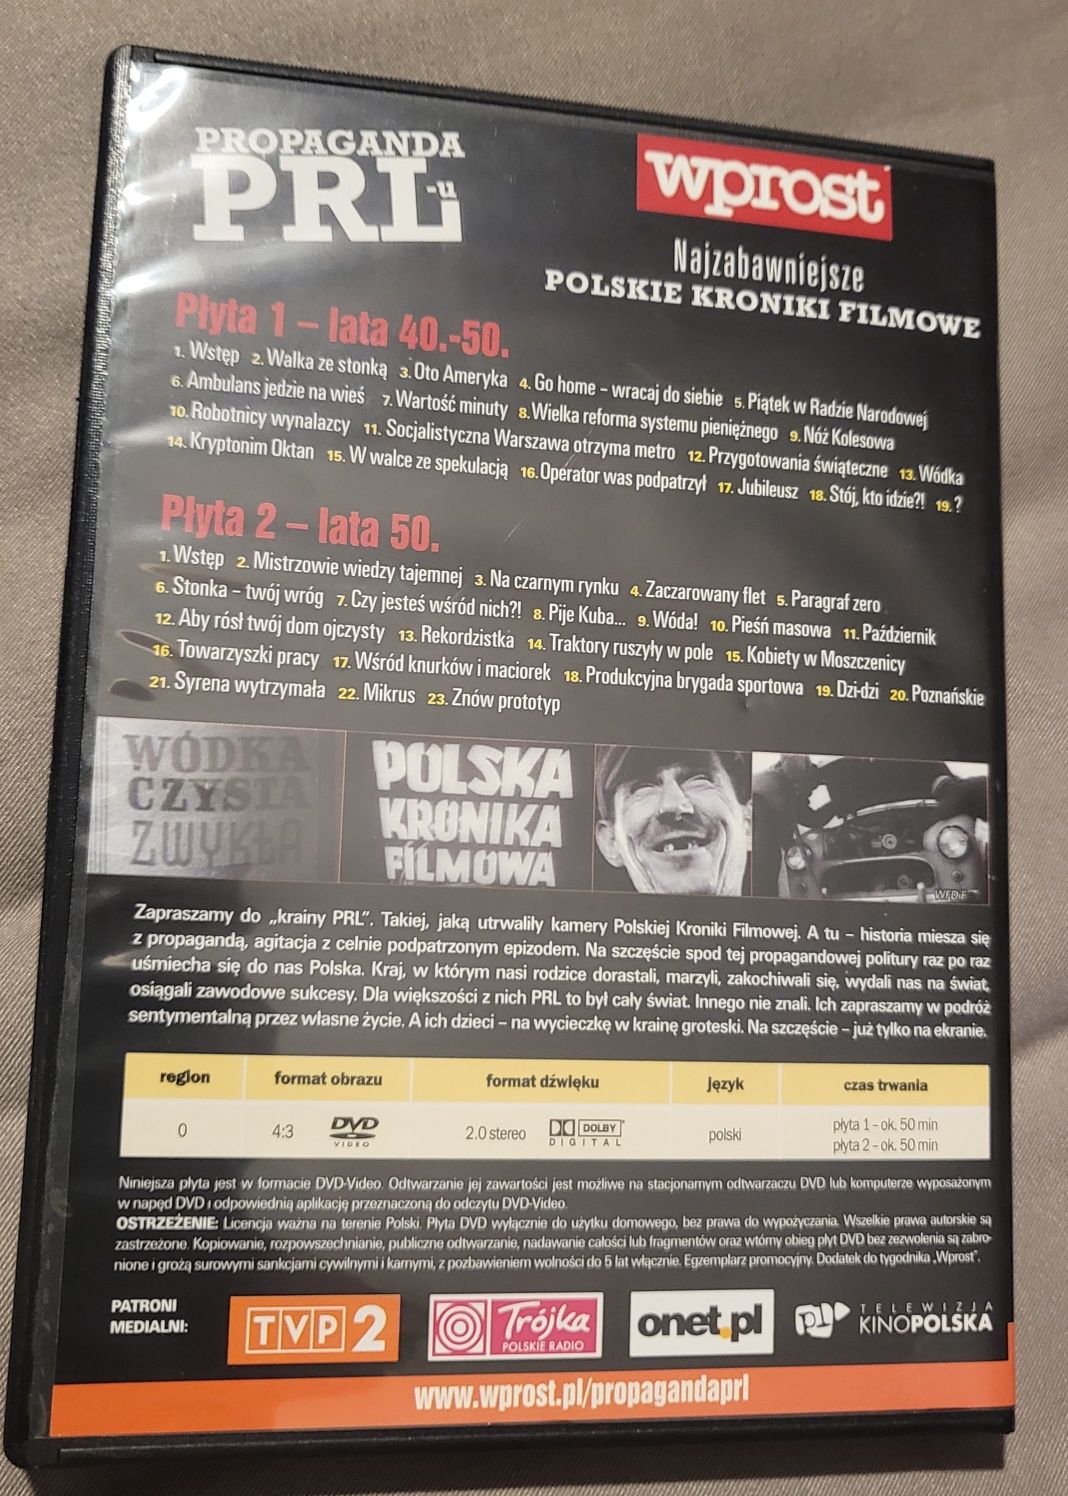 Polska Kronika Filmowa, Propaganda PRL .DVD. Okazja